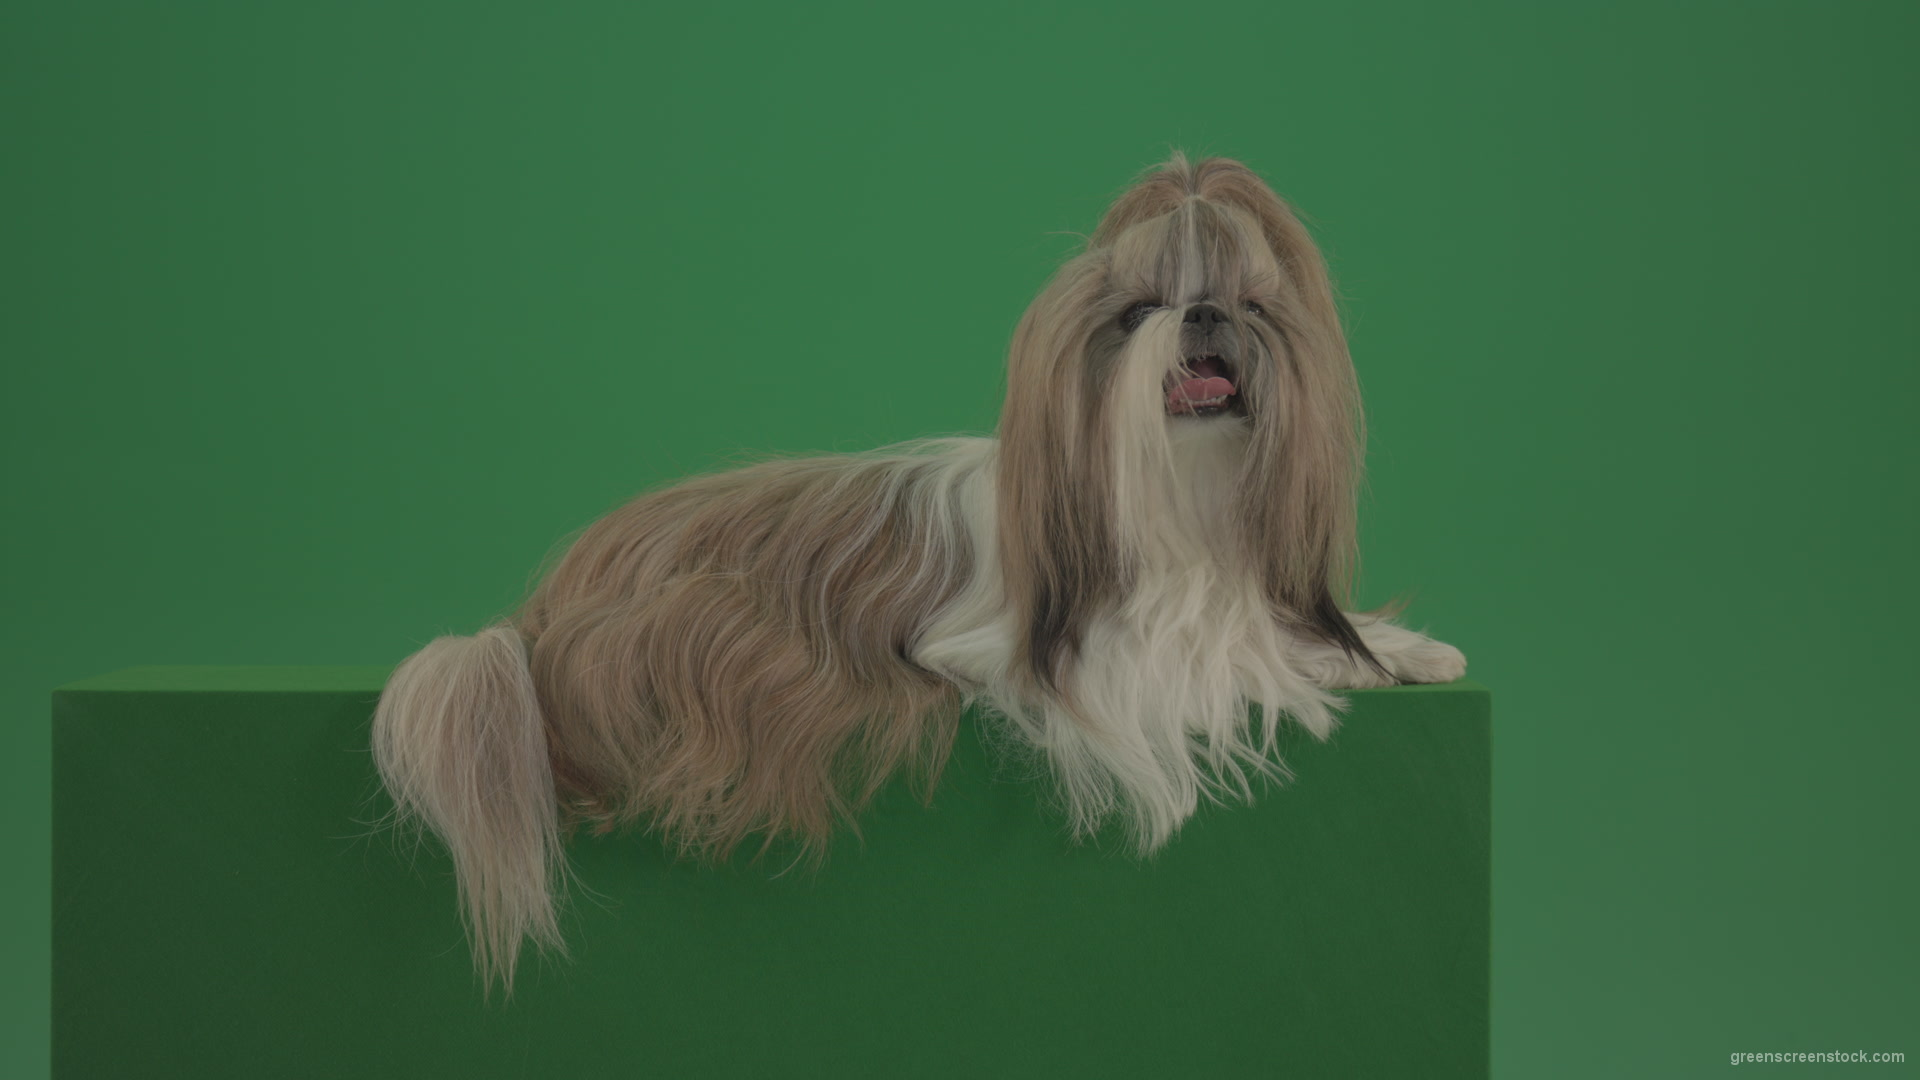 Luxury-bright-hair-Shihtzu-dog-pet-relaxing-on-green-screen-4K_004 Green Screen Stock